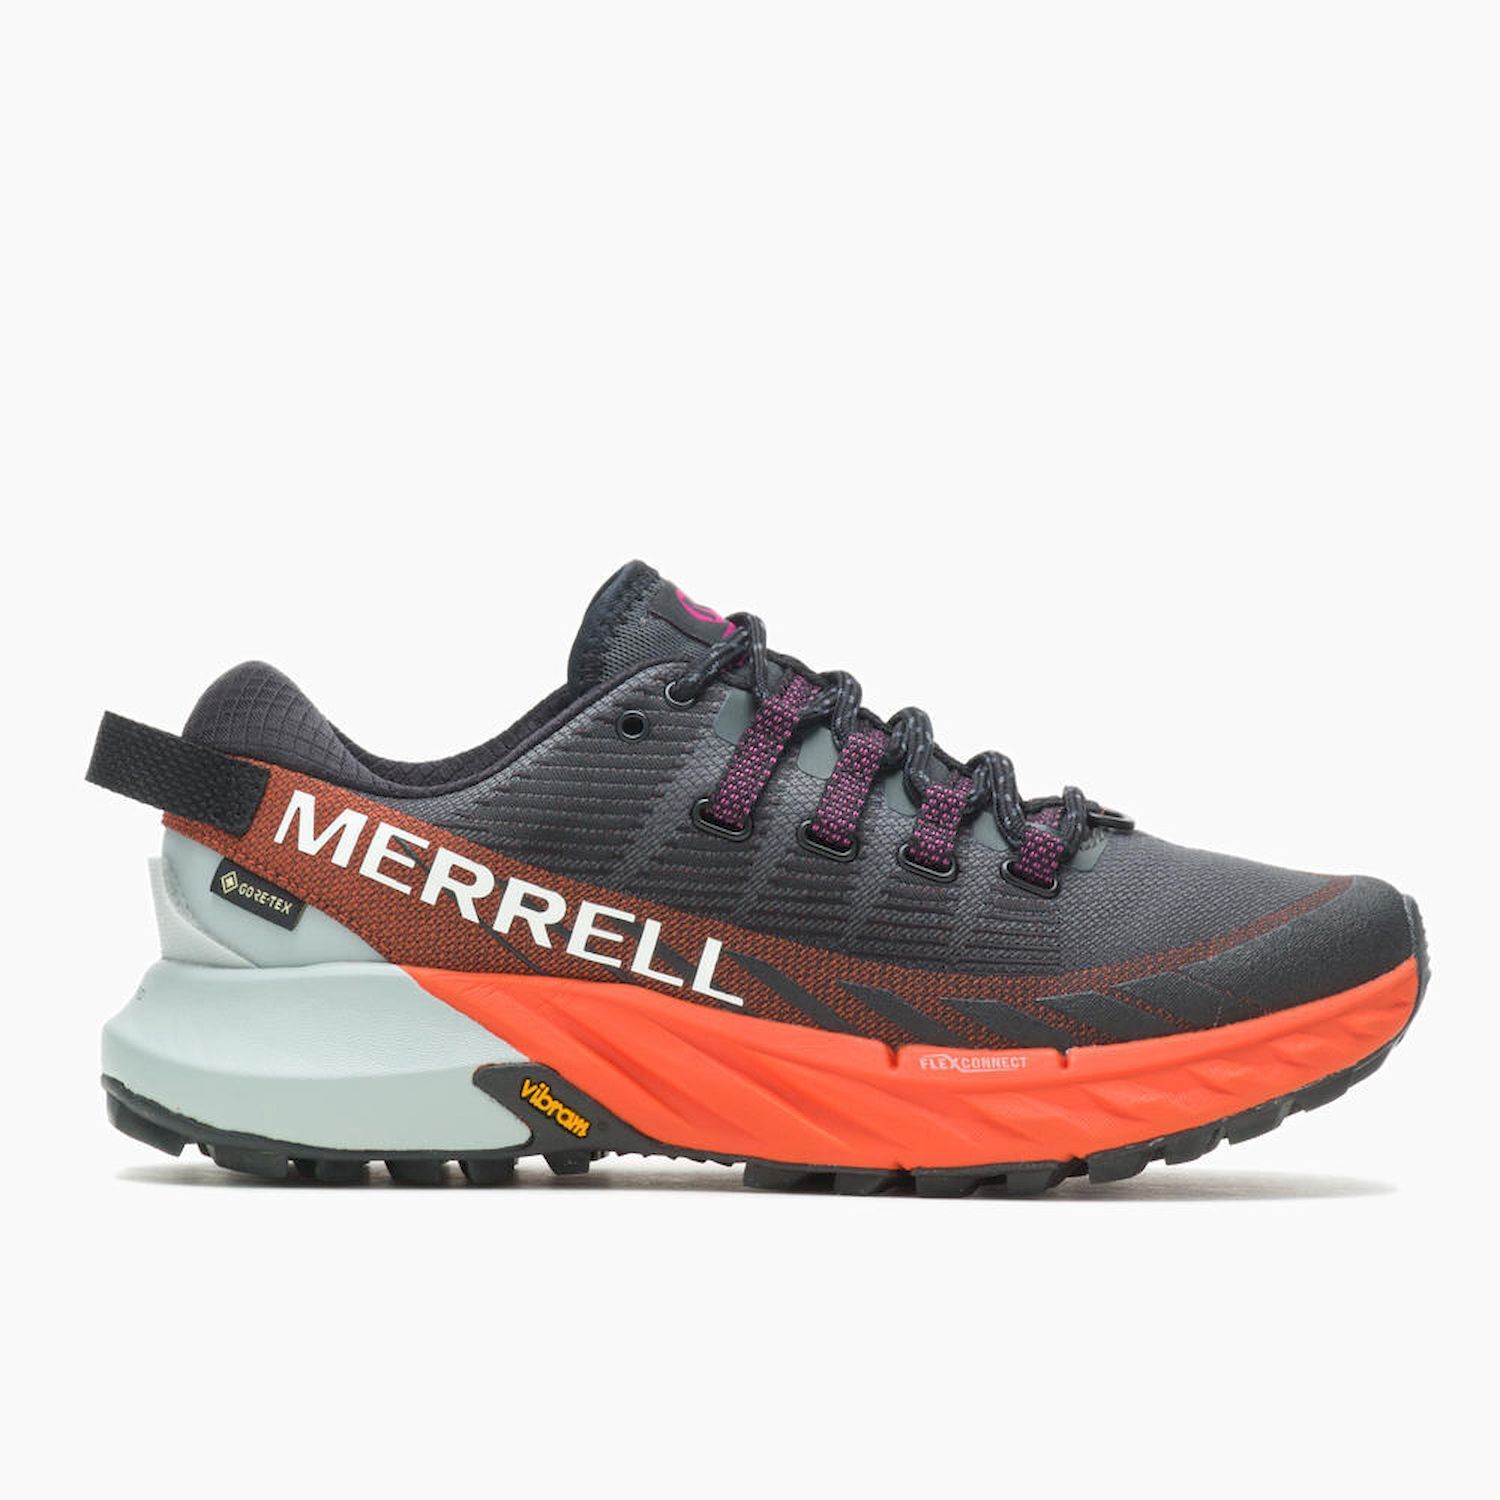 Merrell Agility Peak 4 GTX - Trail running shoes - Women's